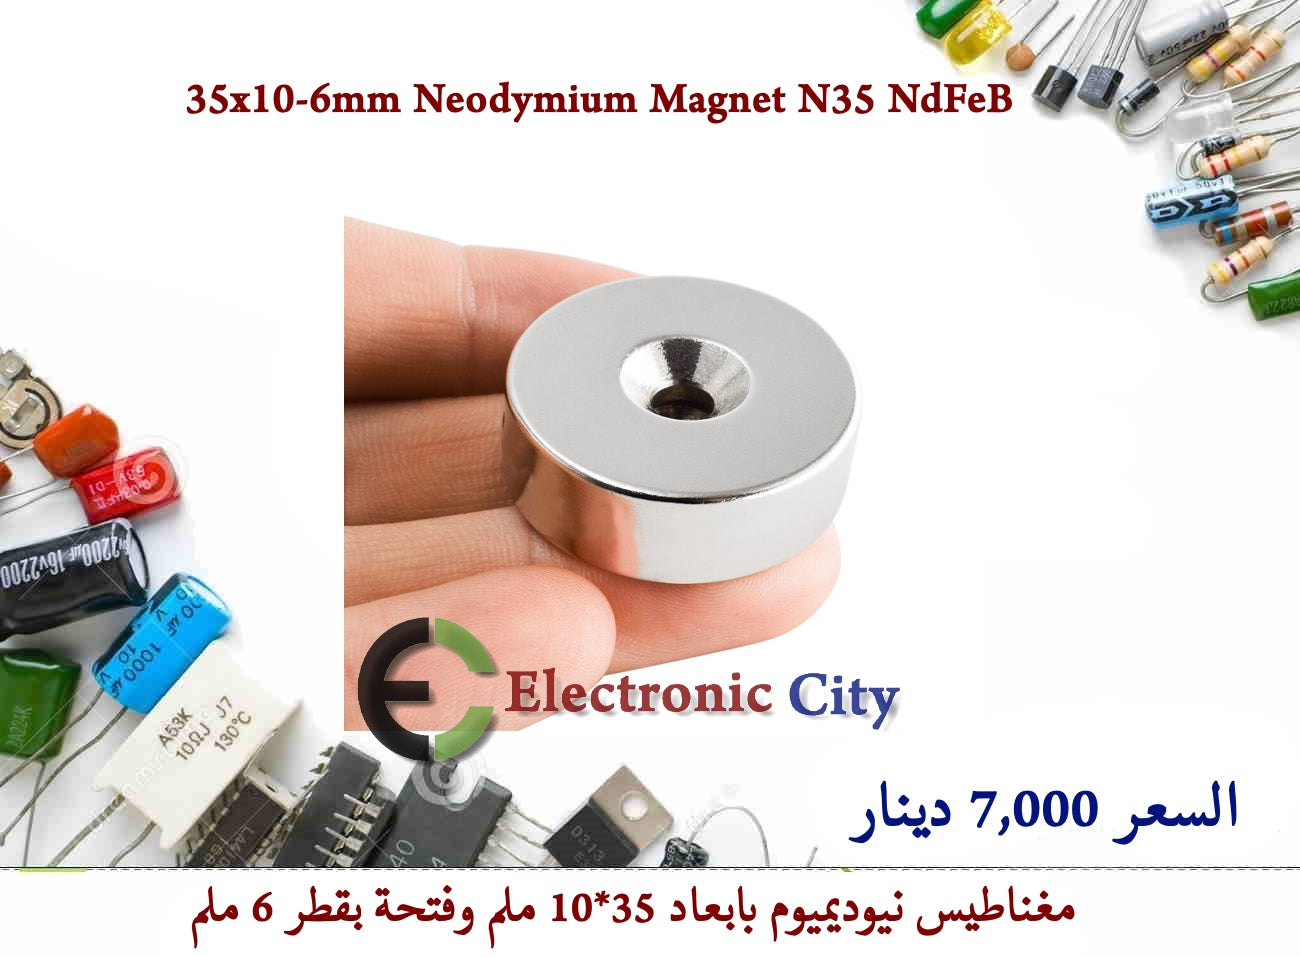 Magnet N35 NdFeB – City المدينة الالكترونية